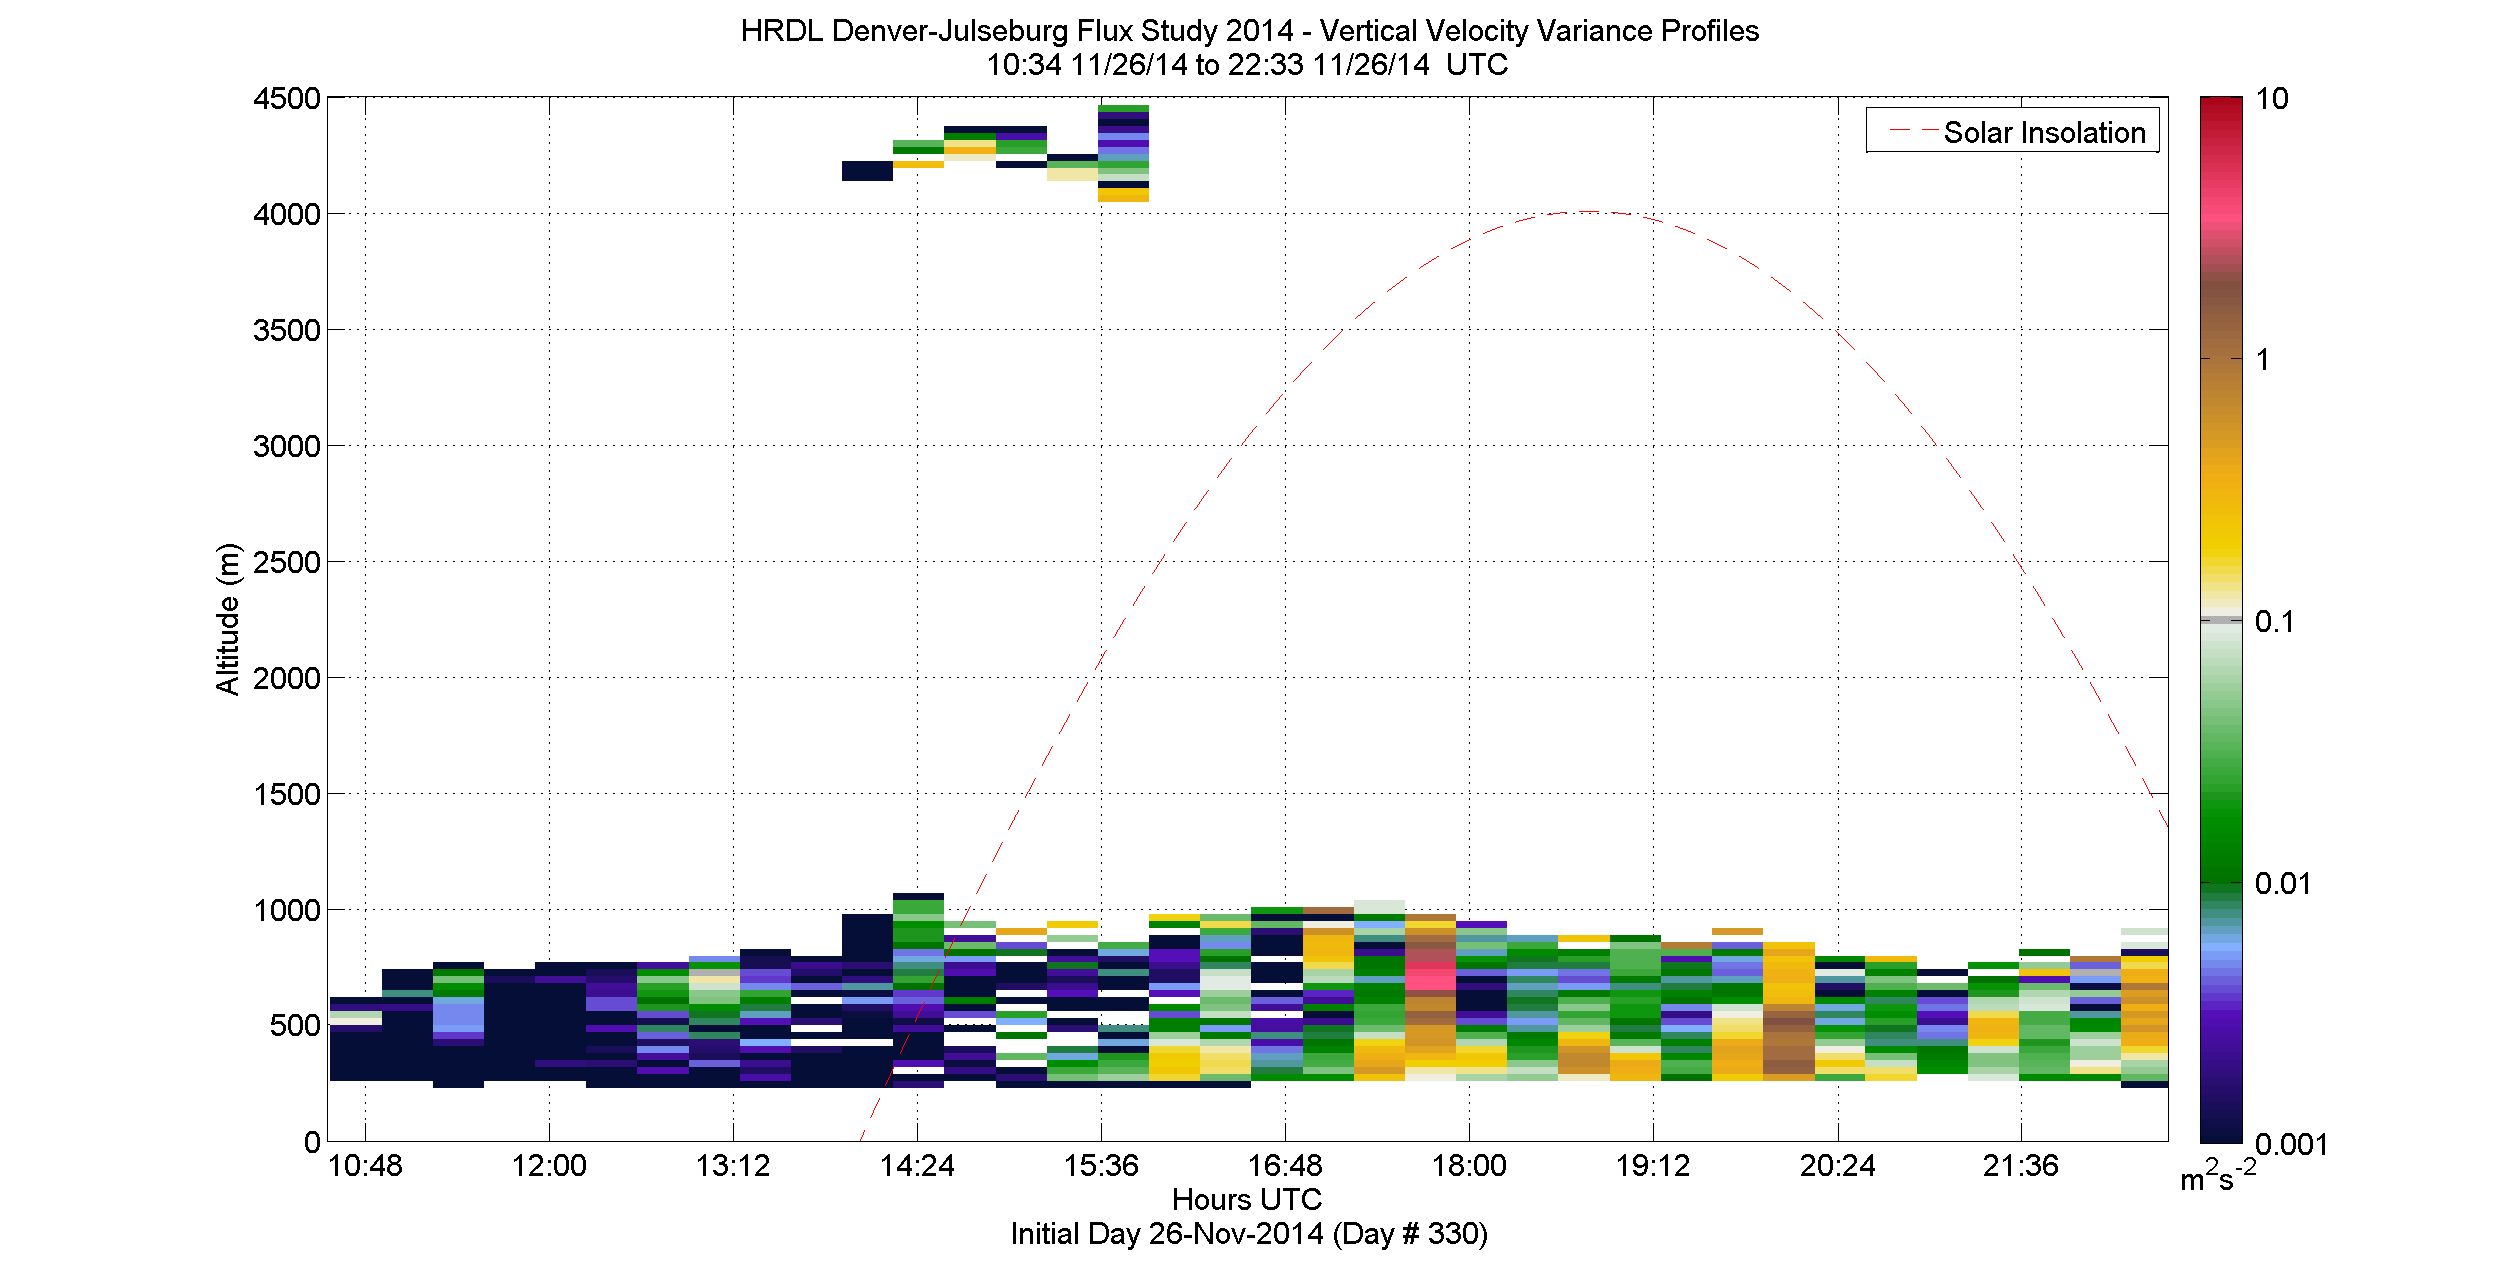 HRDL latest vertical variance profile